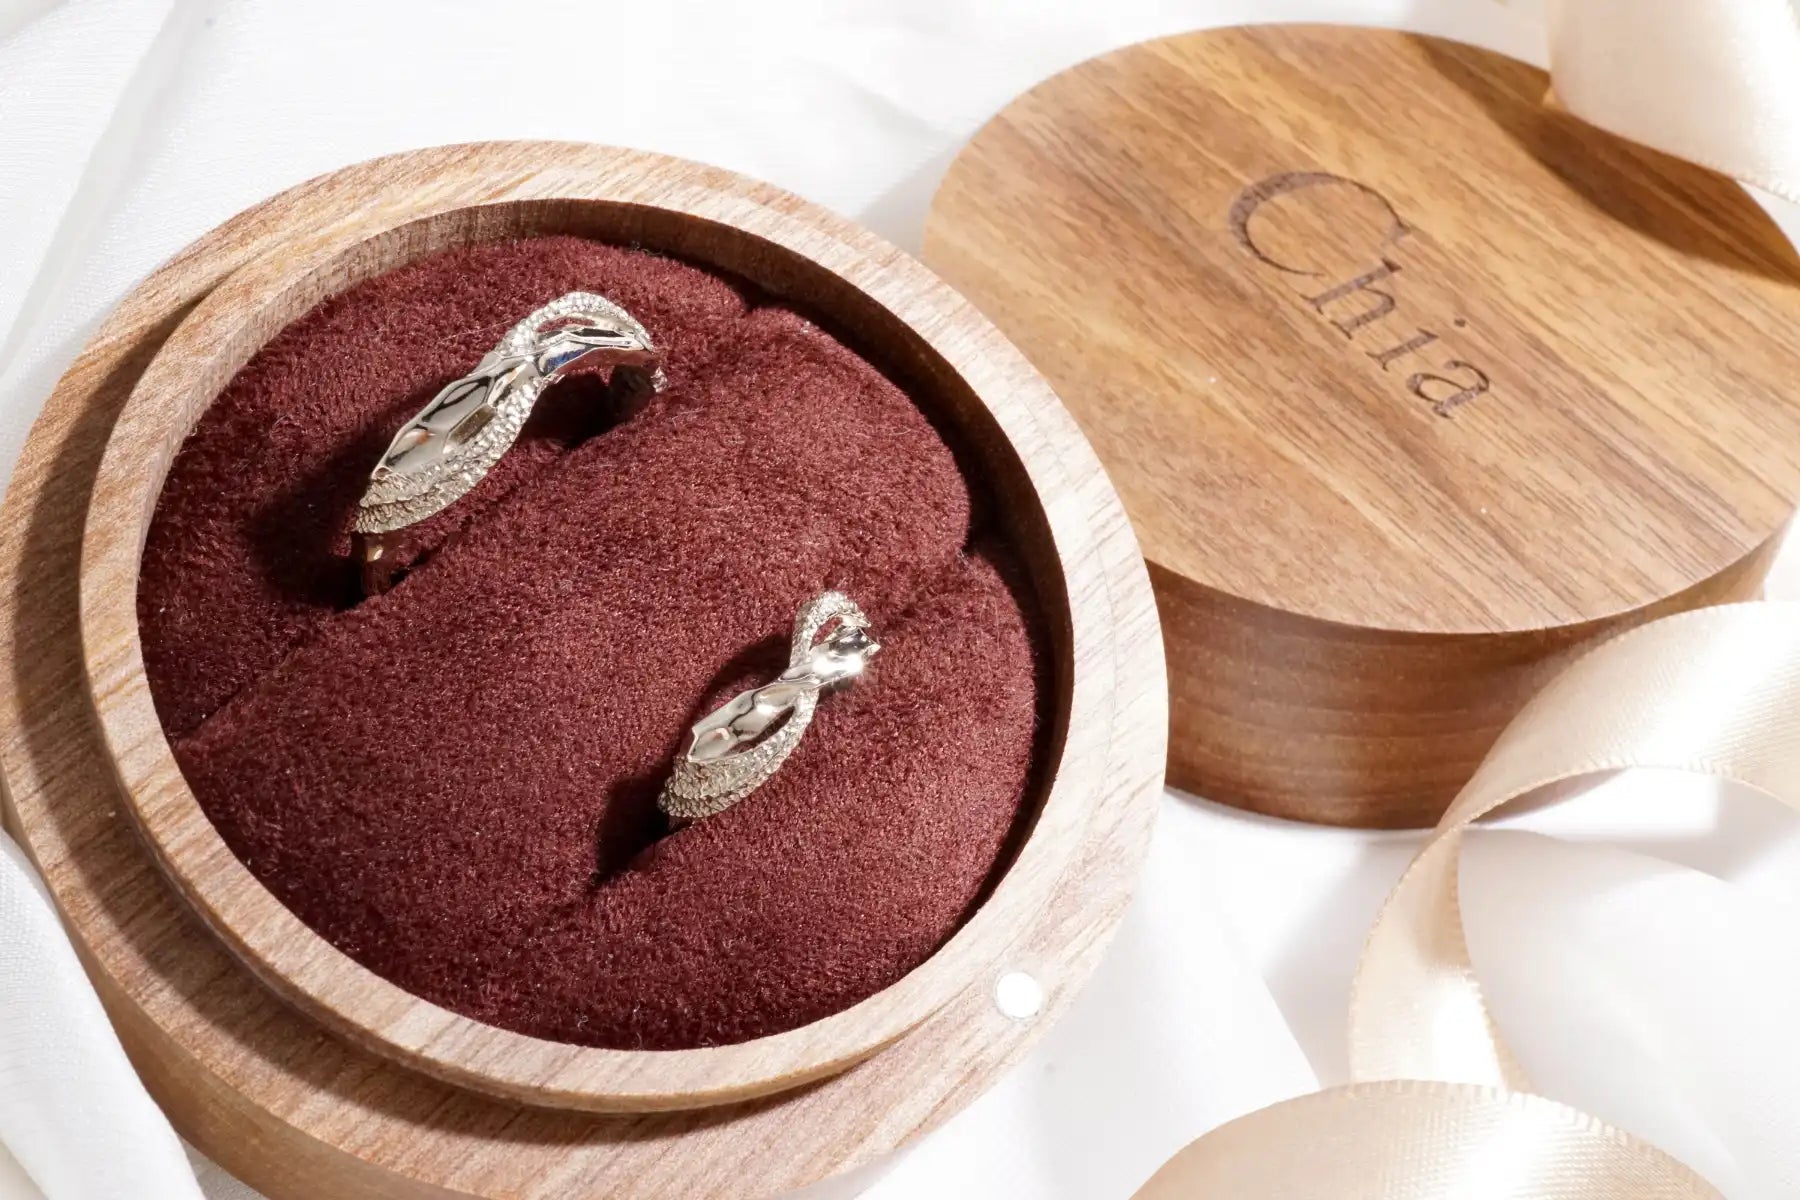 chia jewelry婚戒對戒客製化價格與專櫃婚戒價格比較